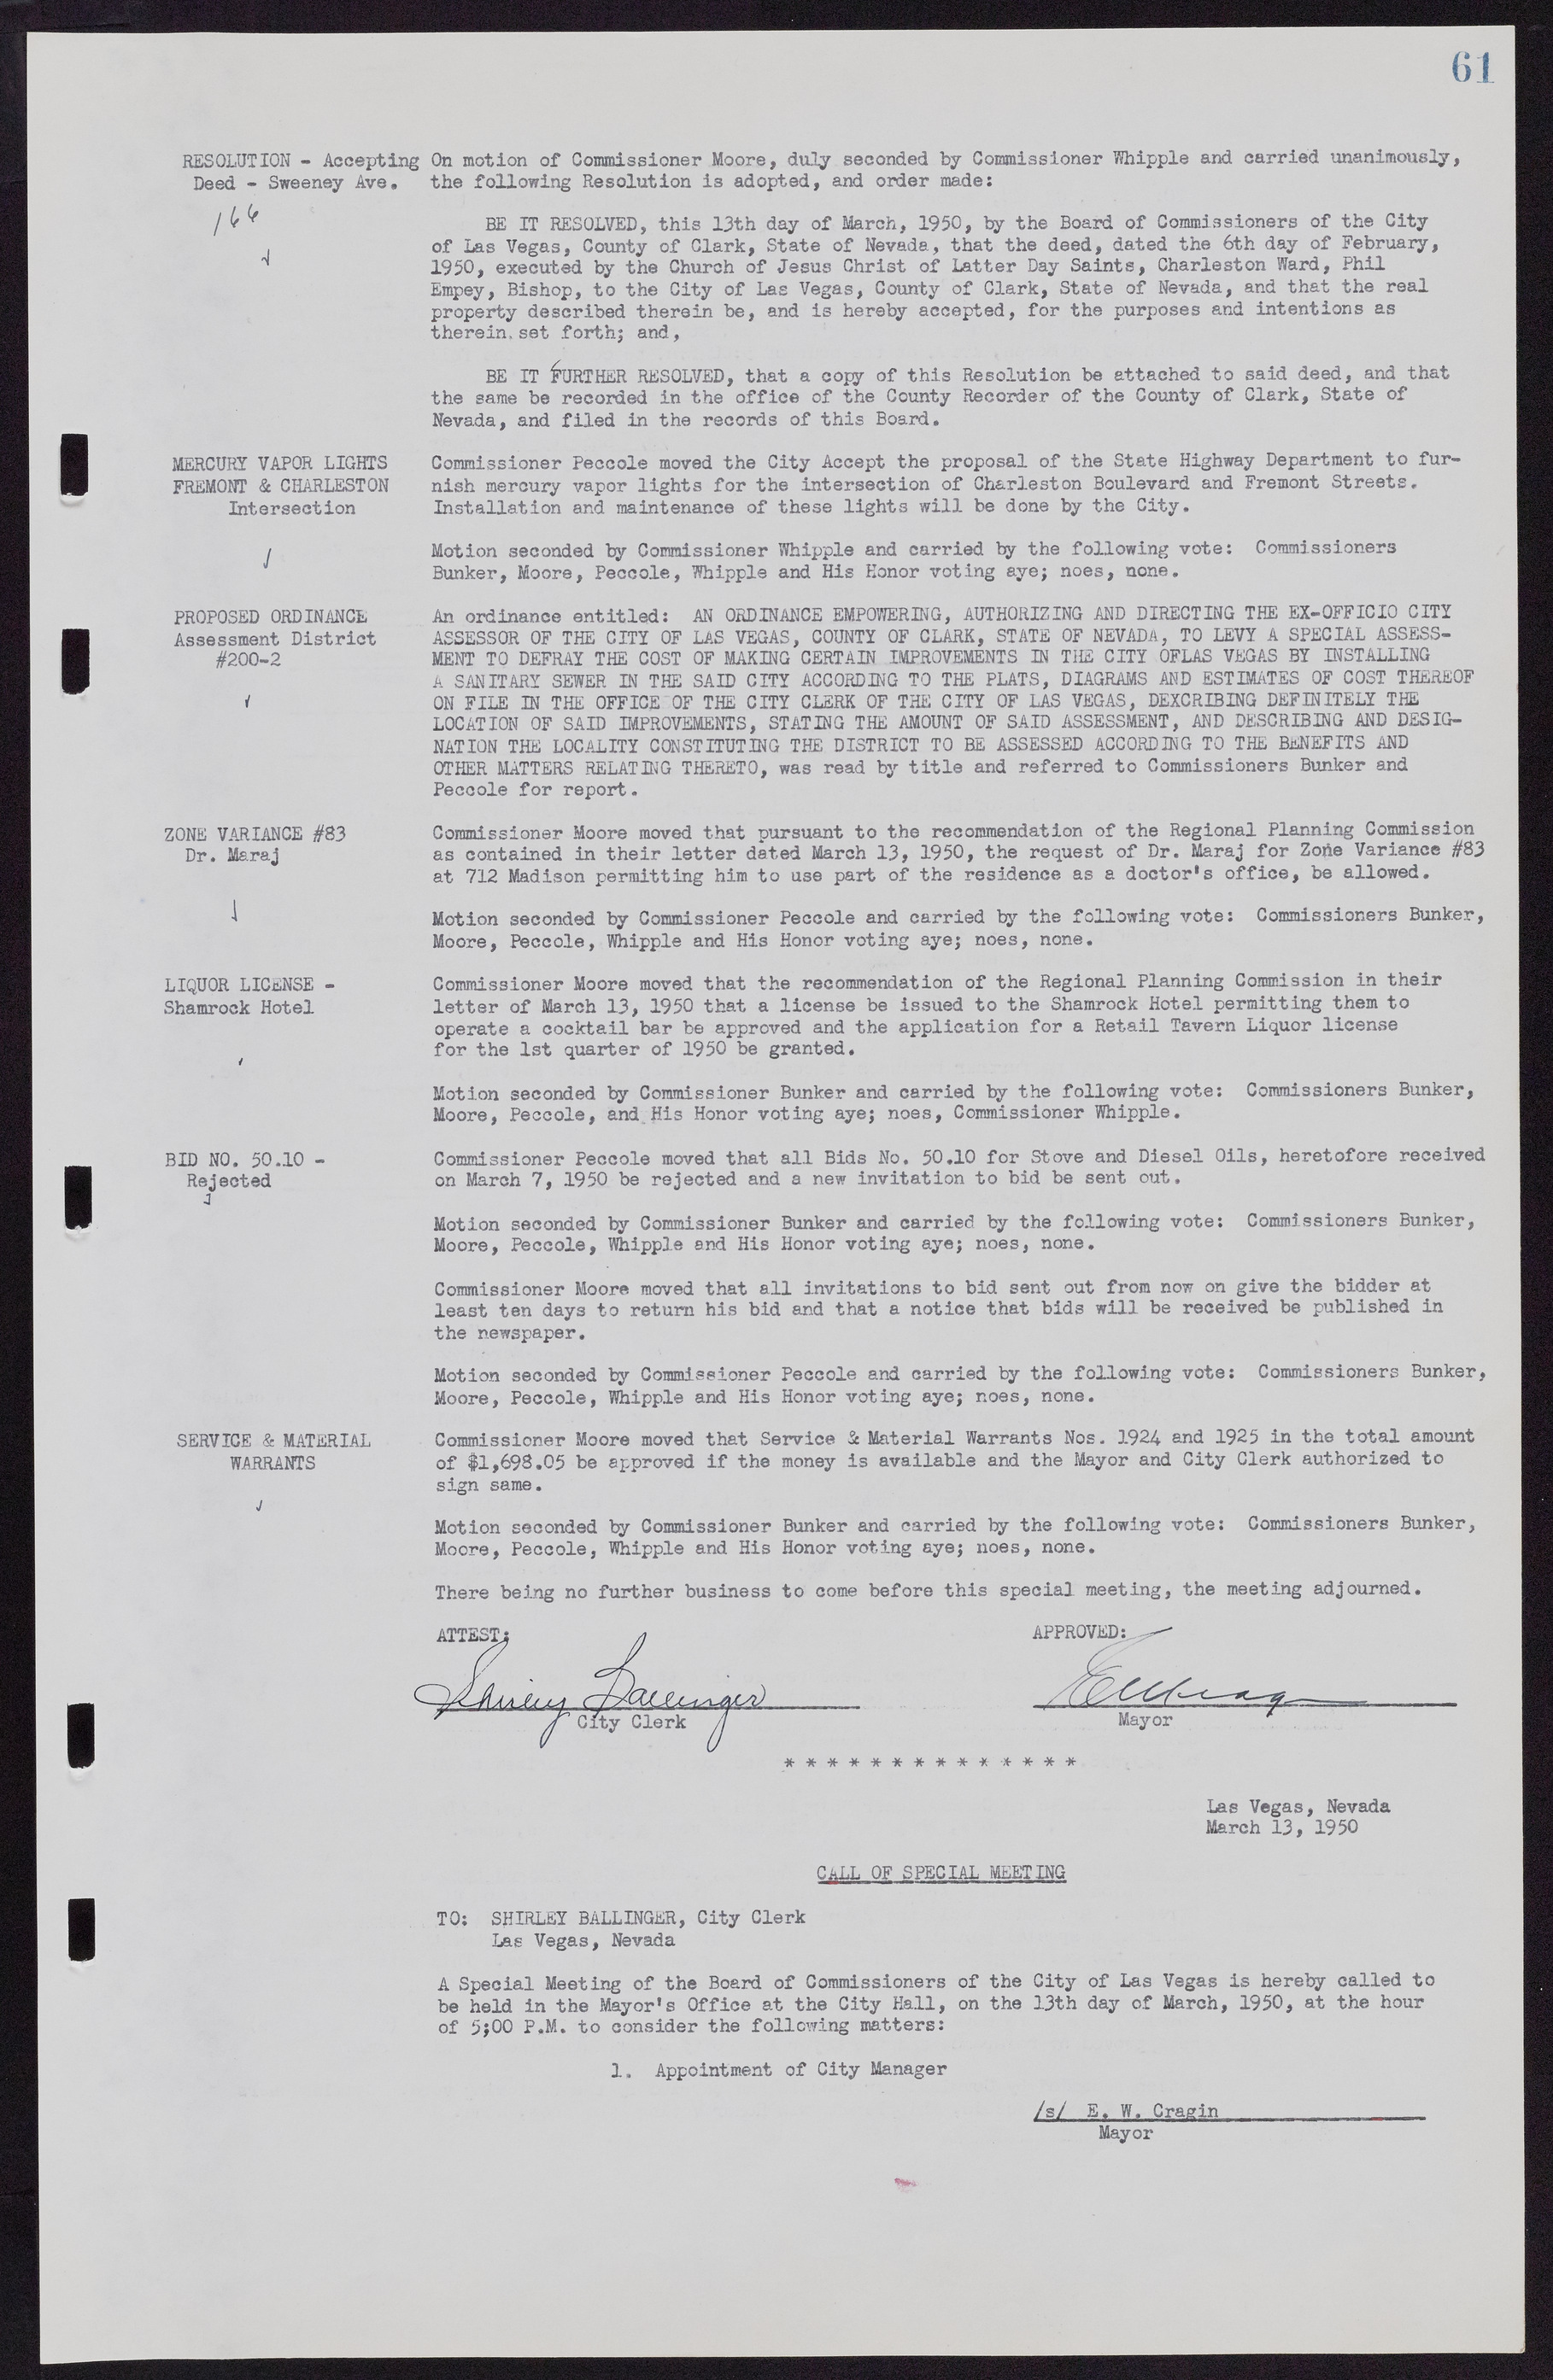 Las Vegas City Commission Minutes, November 7, 1949 to May 21, 1952, lvc000007-69